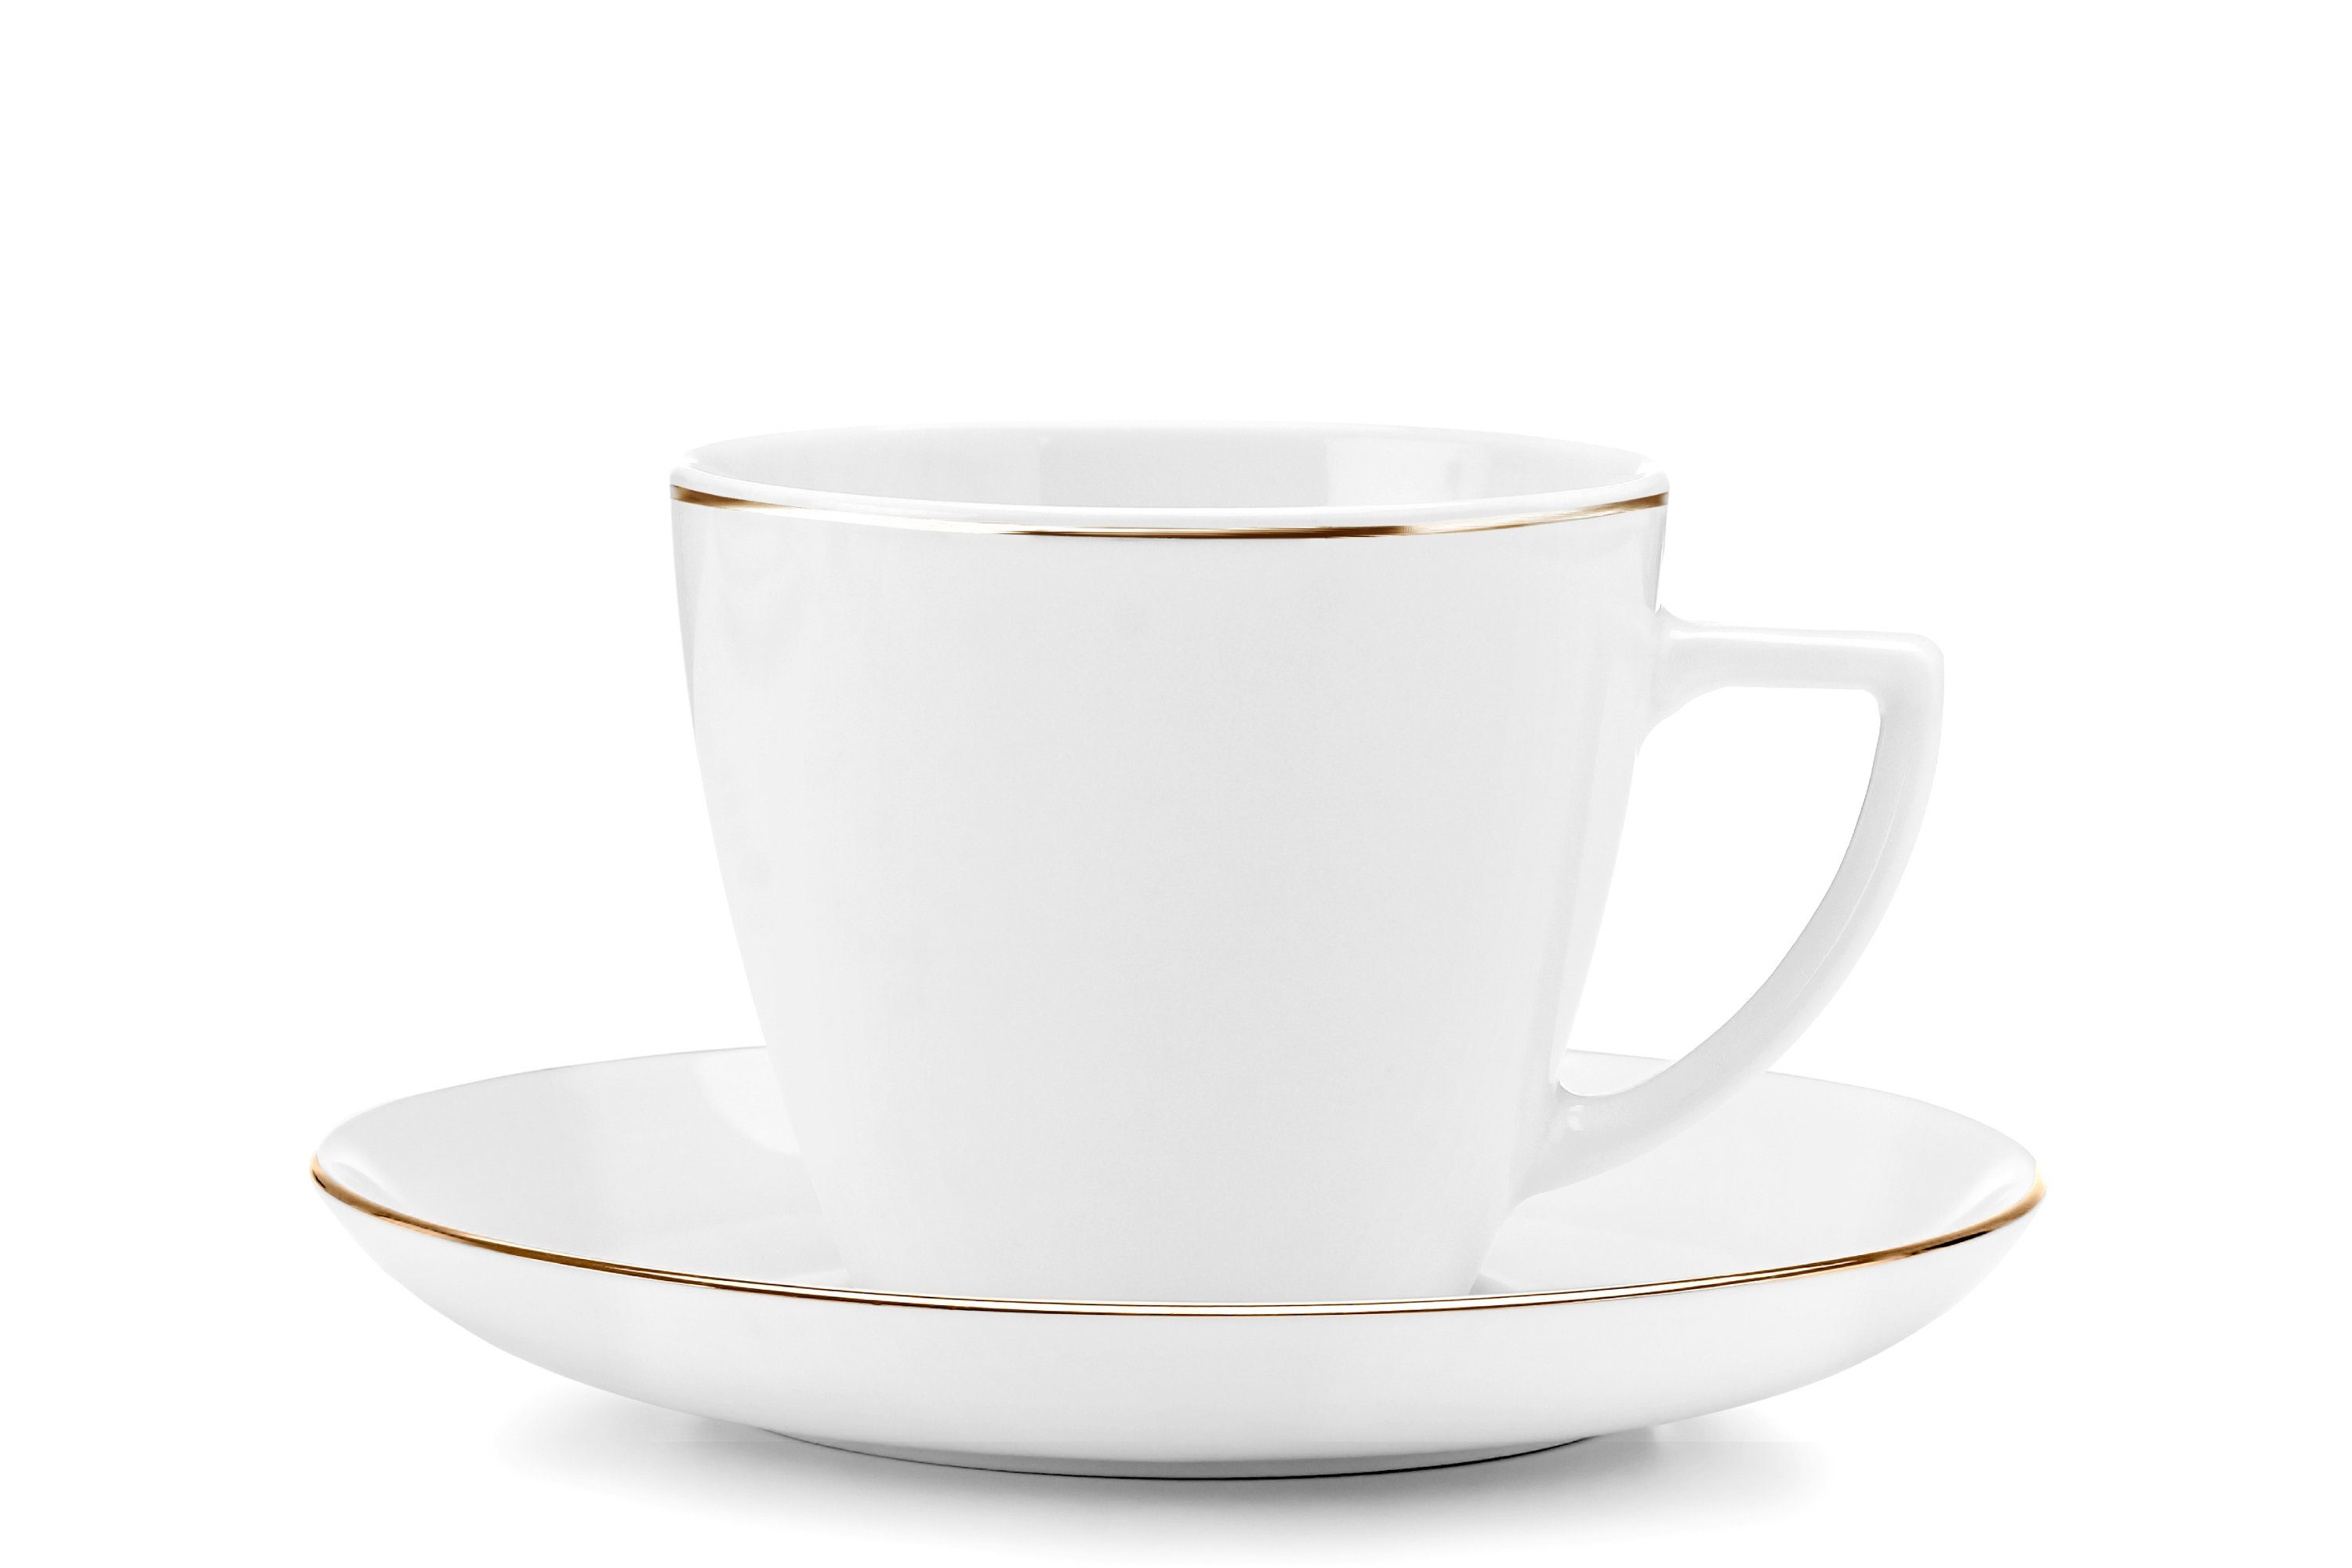 Konsimo Kombiservice BOSS Tafelservice Kaffeeservice Teeservice Porzellan, 6 Weiß/Gold (30-tlg), 350ml Personen, rund